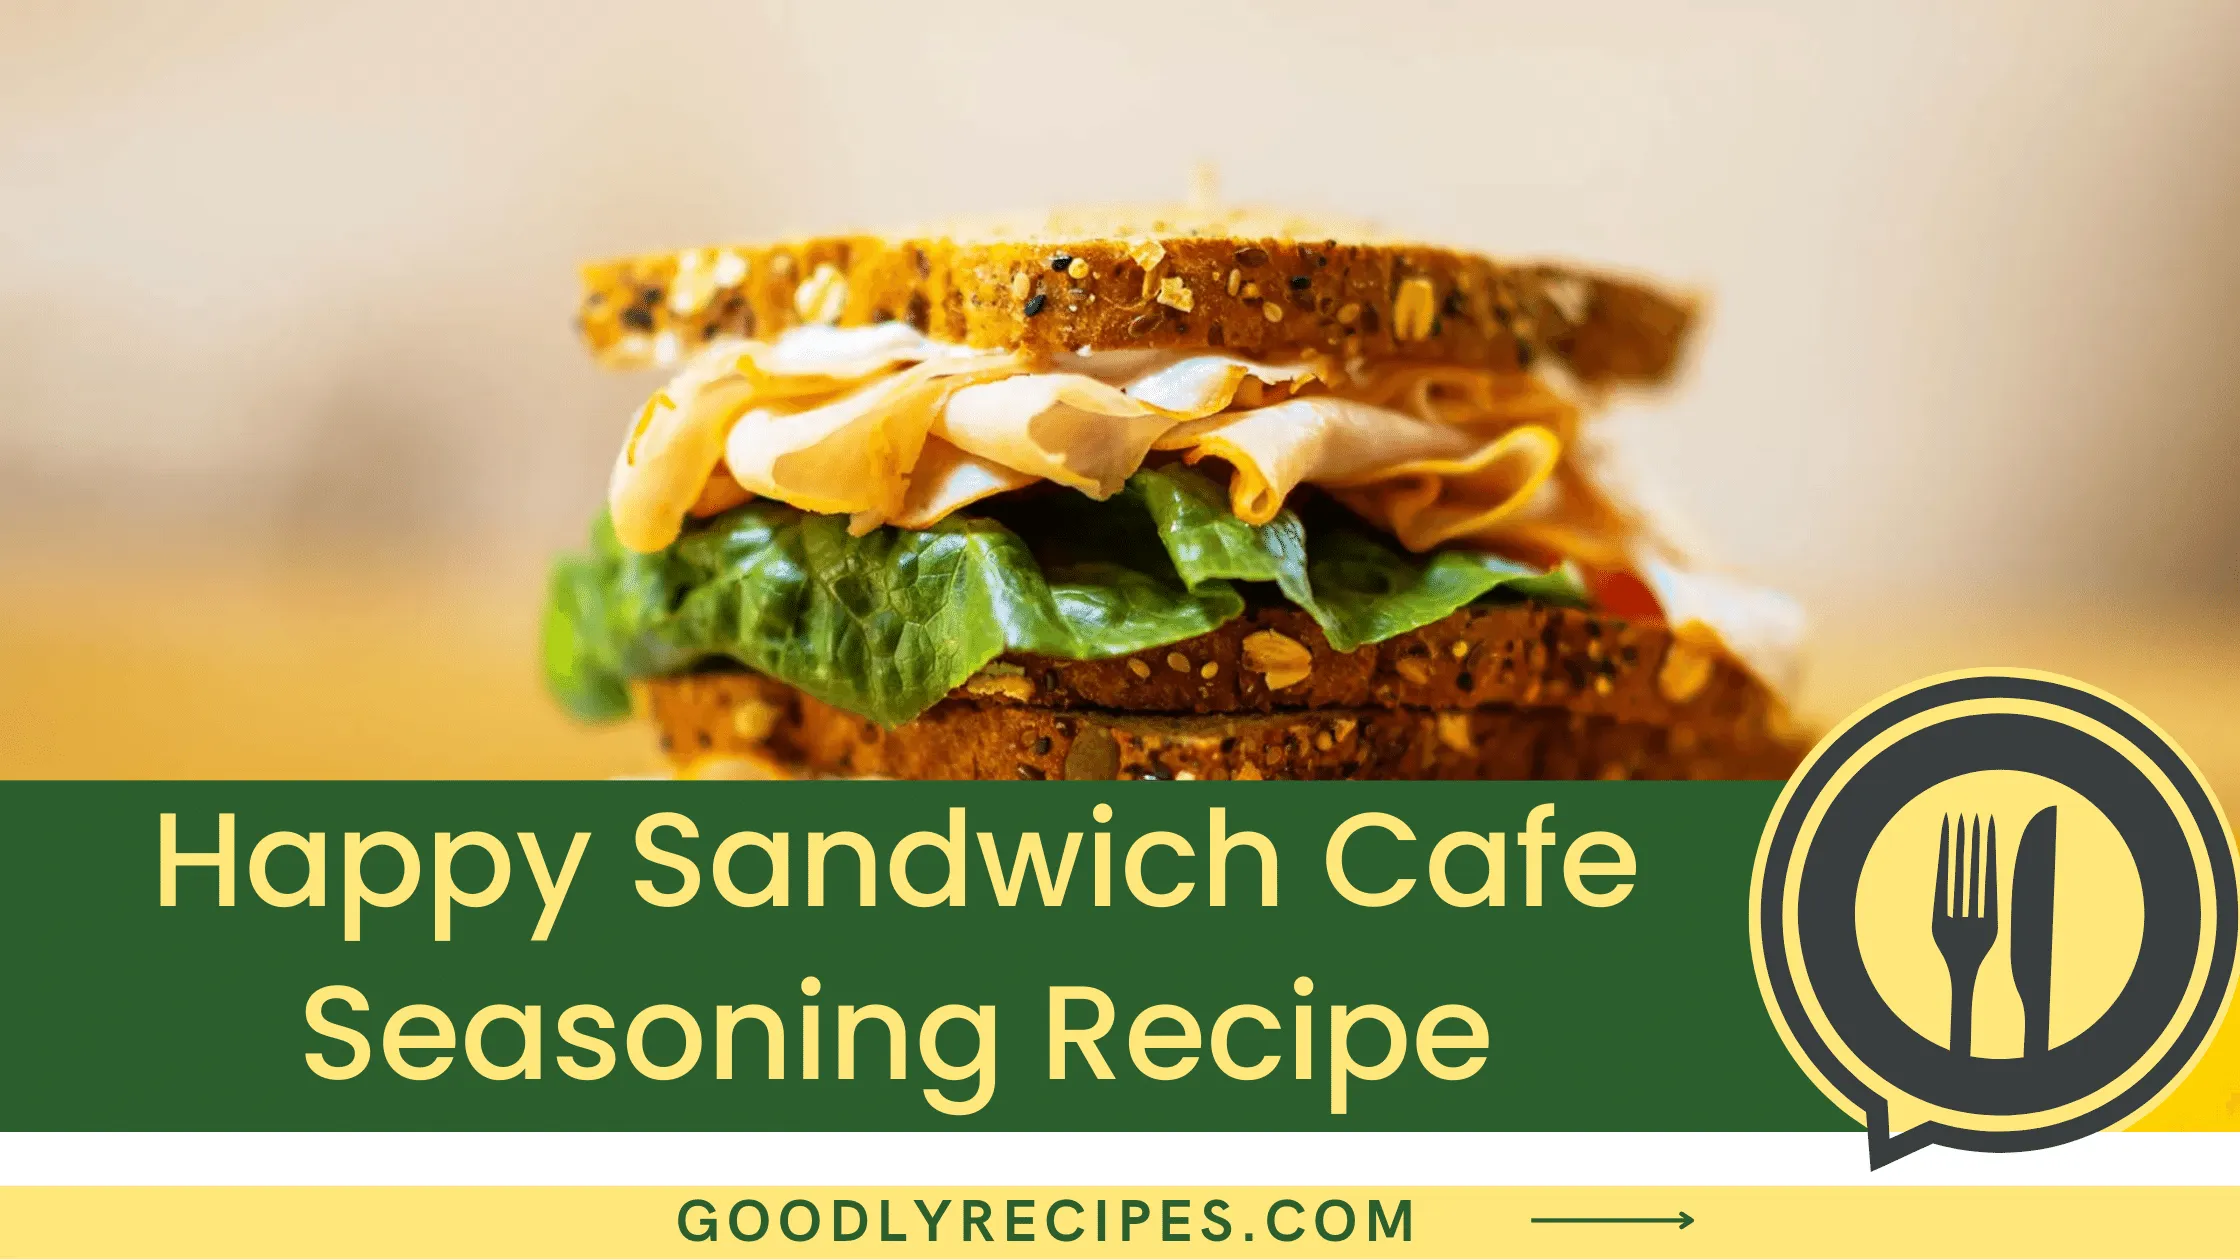 What Is Happy Sandwich Cafe Seasoning?